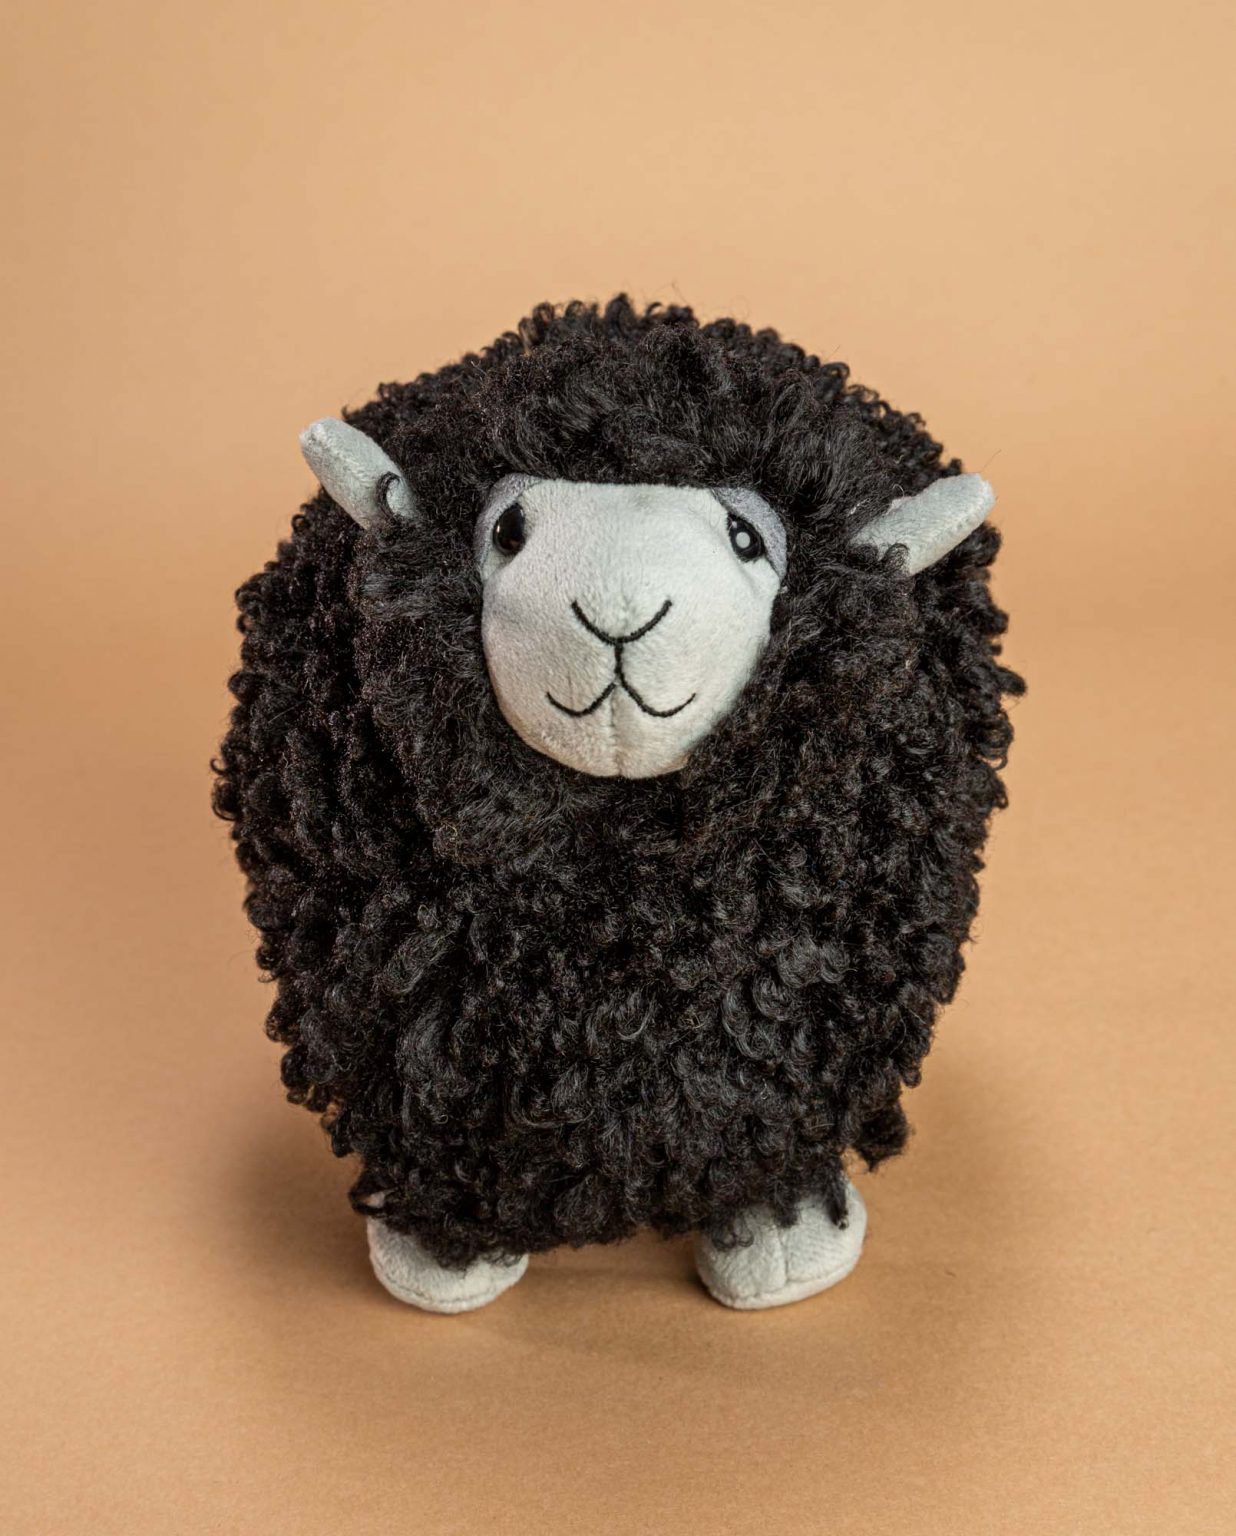 Jellycat Rolbie Black Sheep soft toy gift - Send a Cuddly